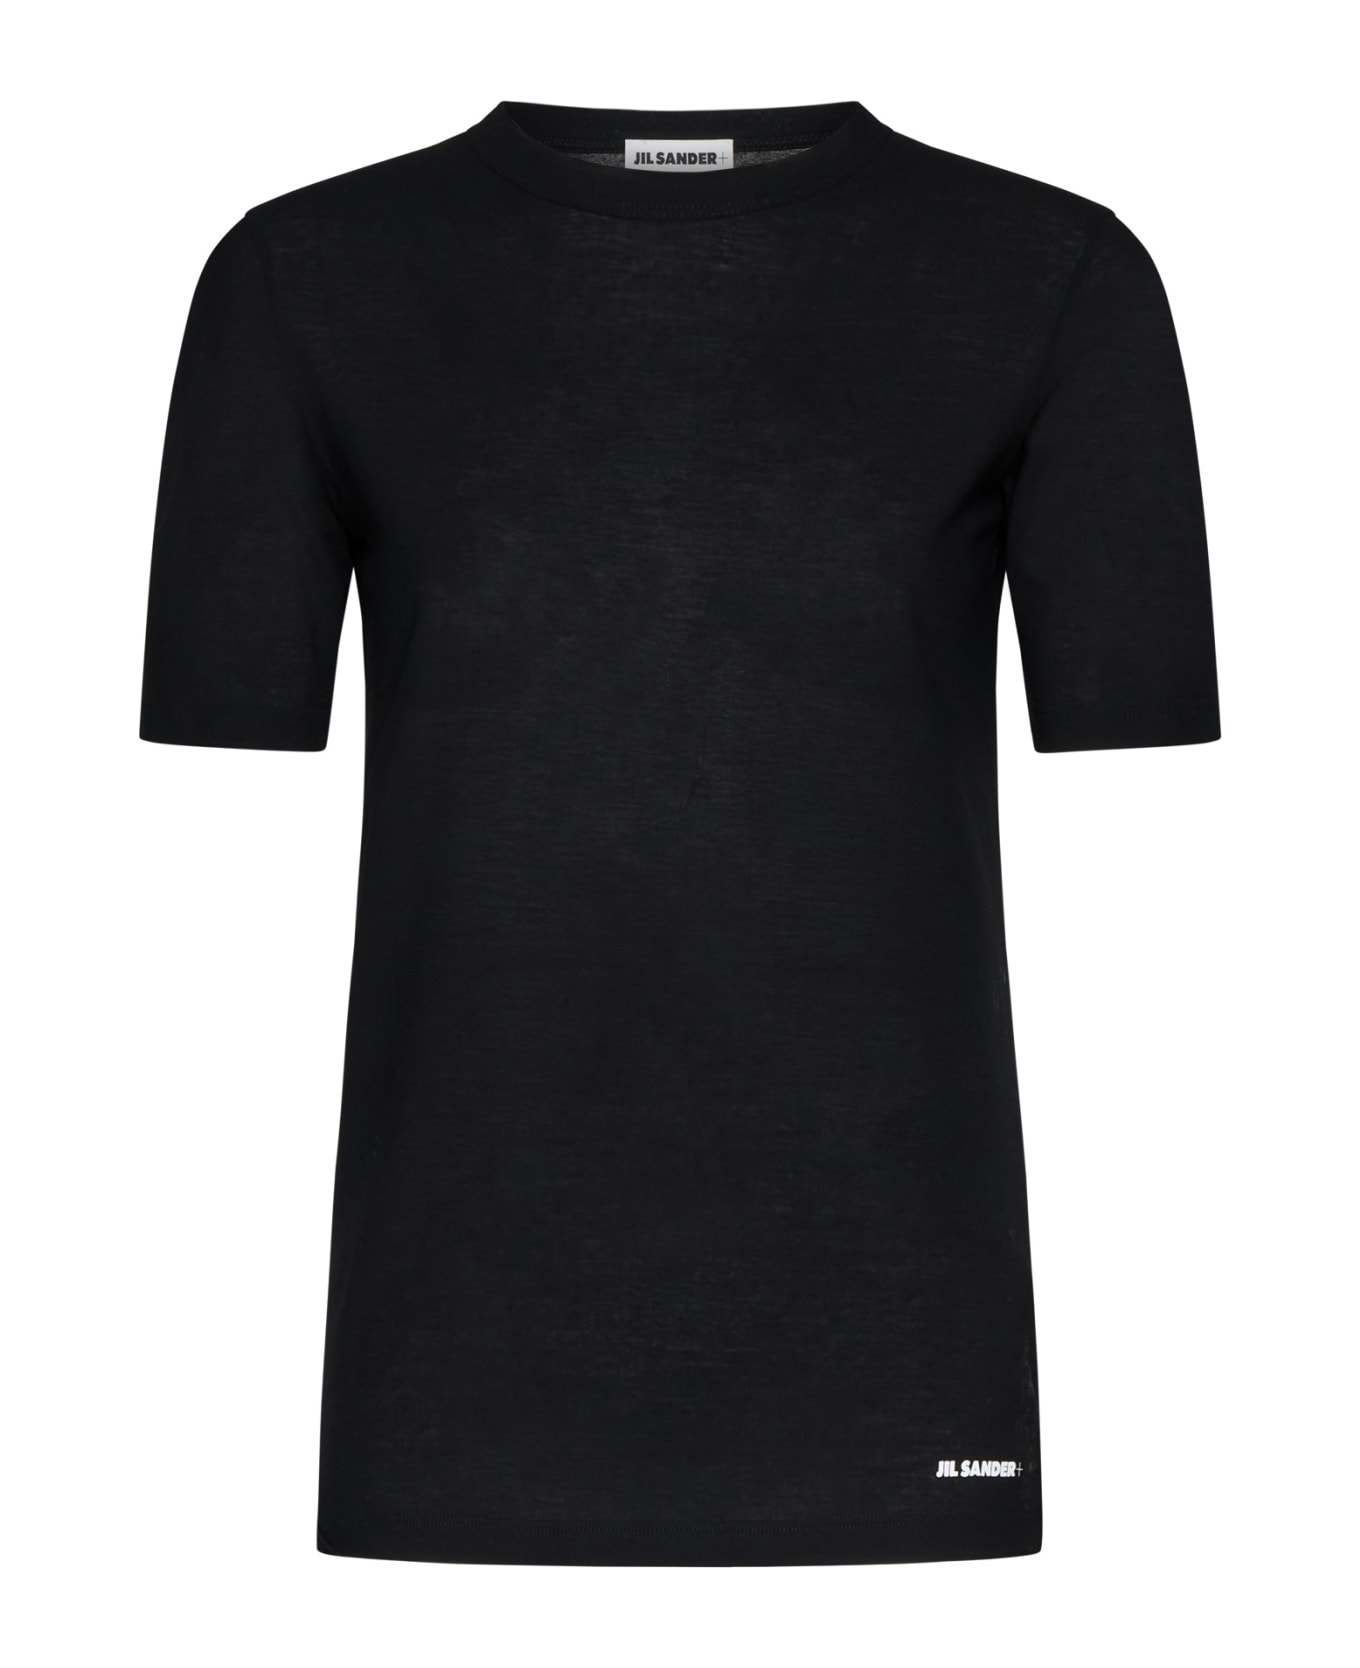 Jil Sander T-Shirt - Black Tシャツ